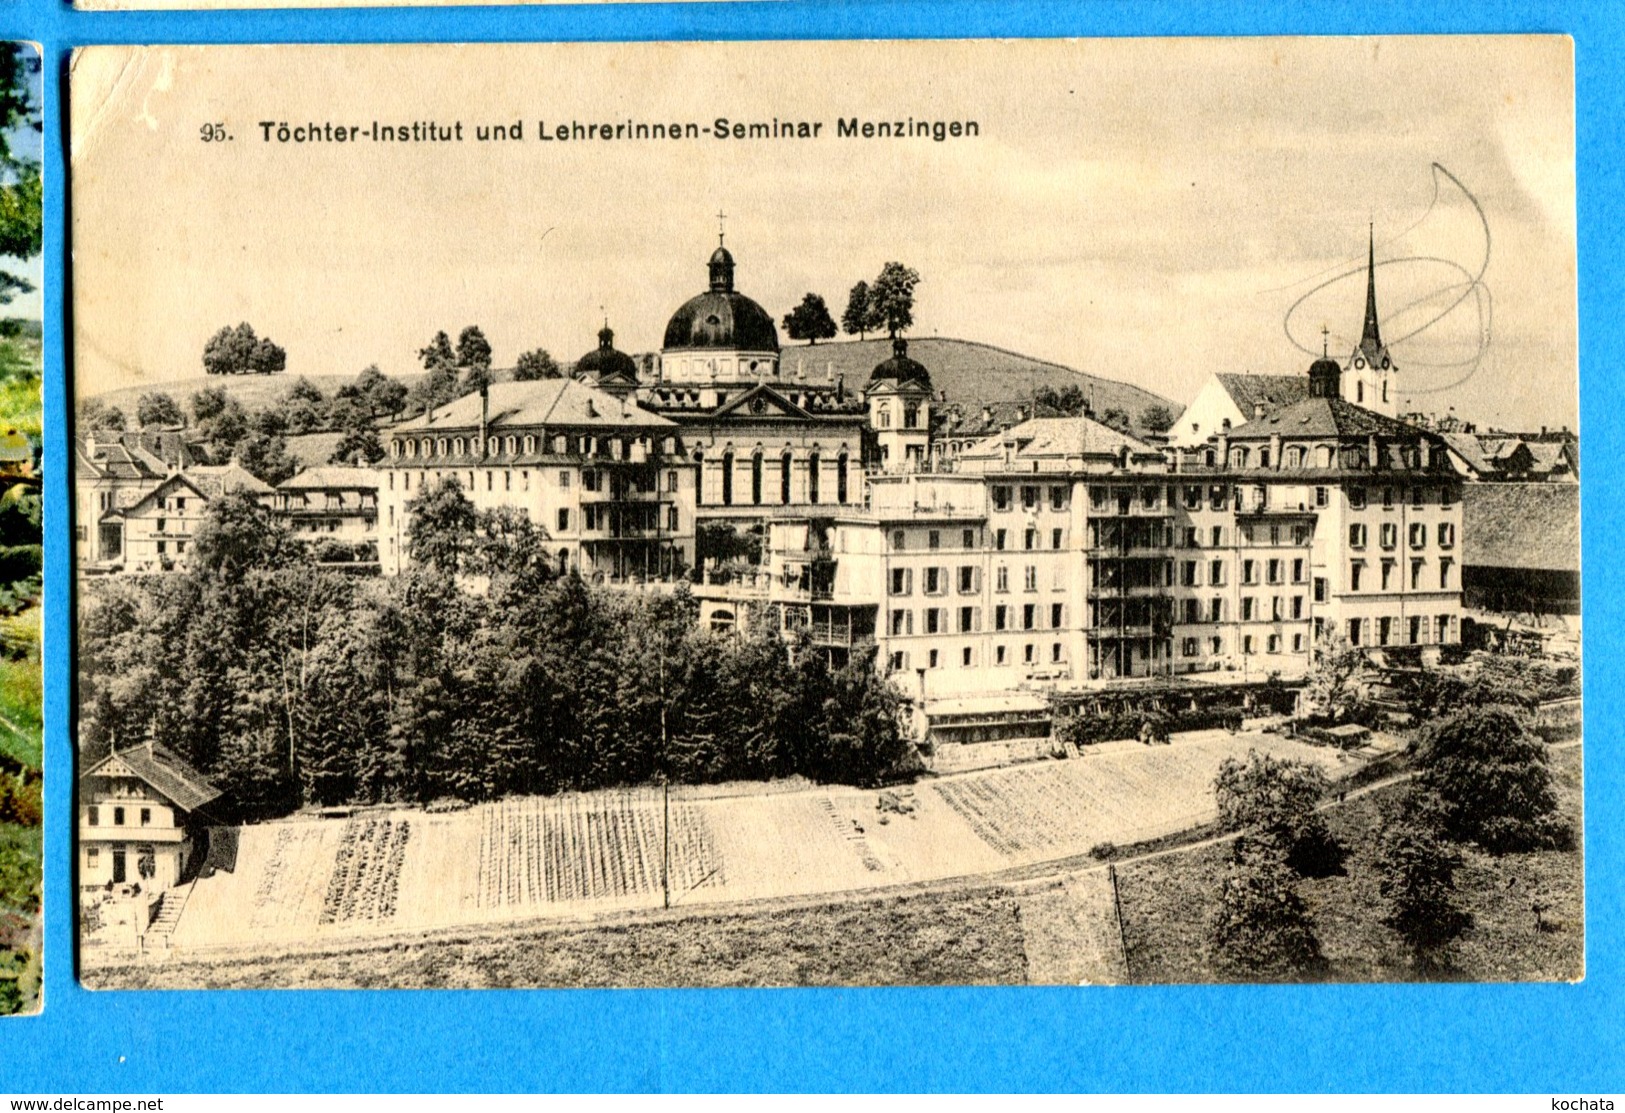 OLI278, Menzingen, Töchter-Institut, Lehrerinnen- Seminar, 95, Circulée 1913 - Menzingen